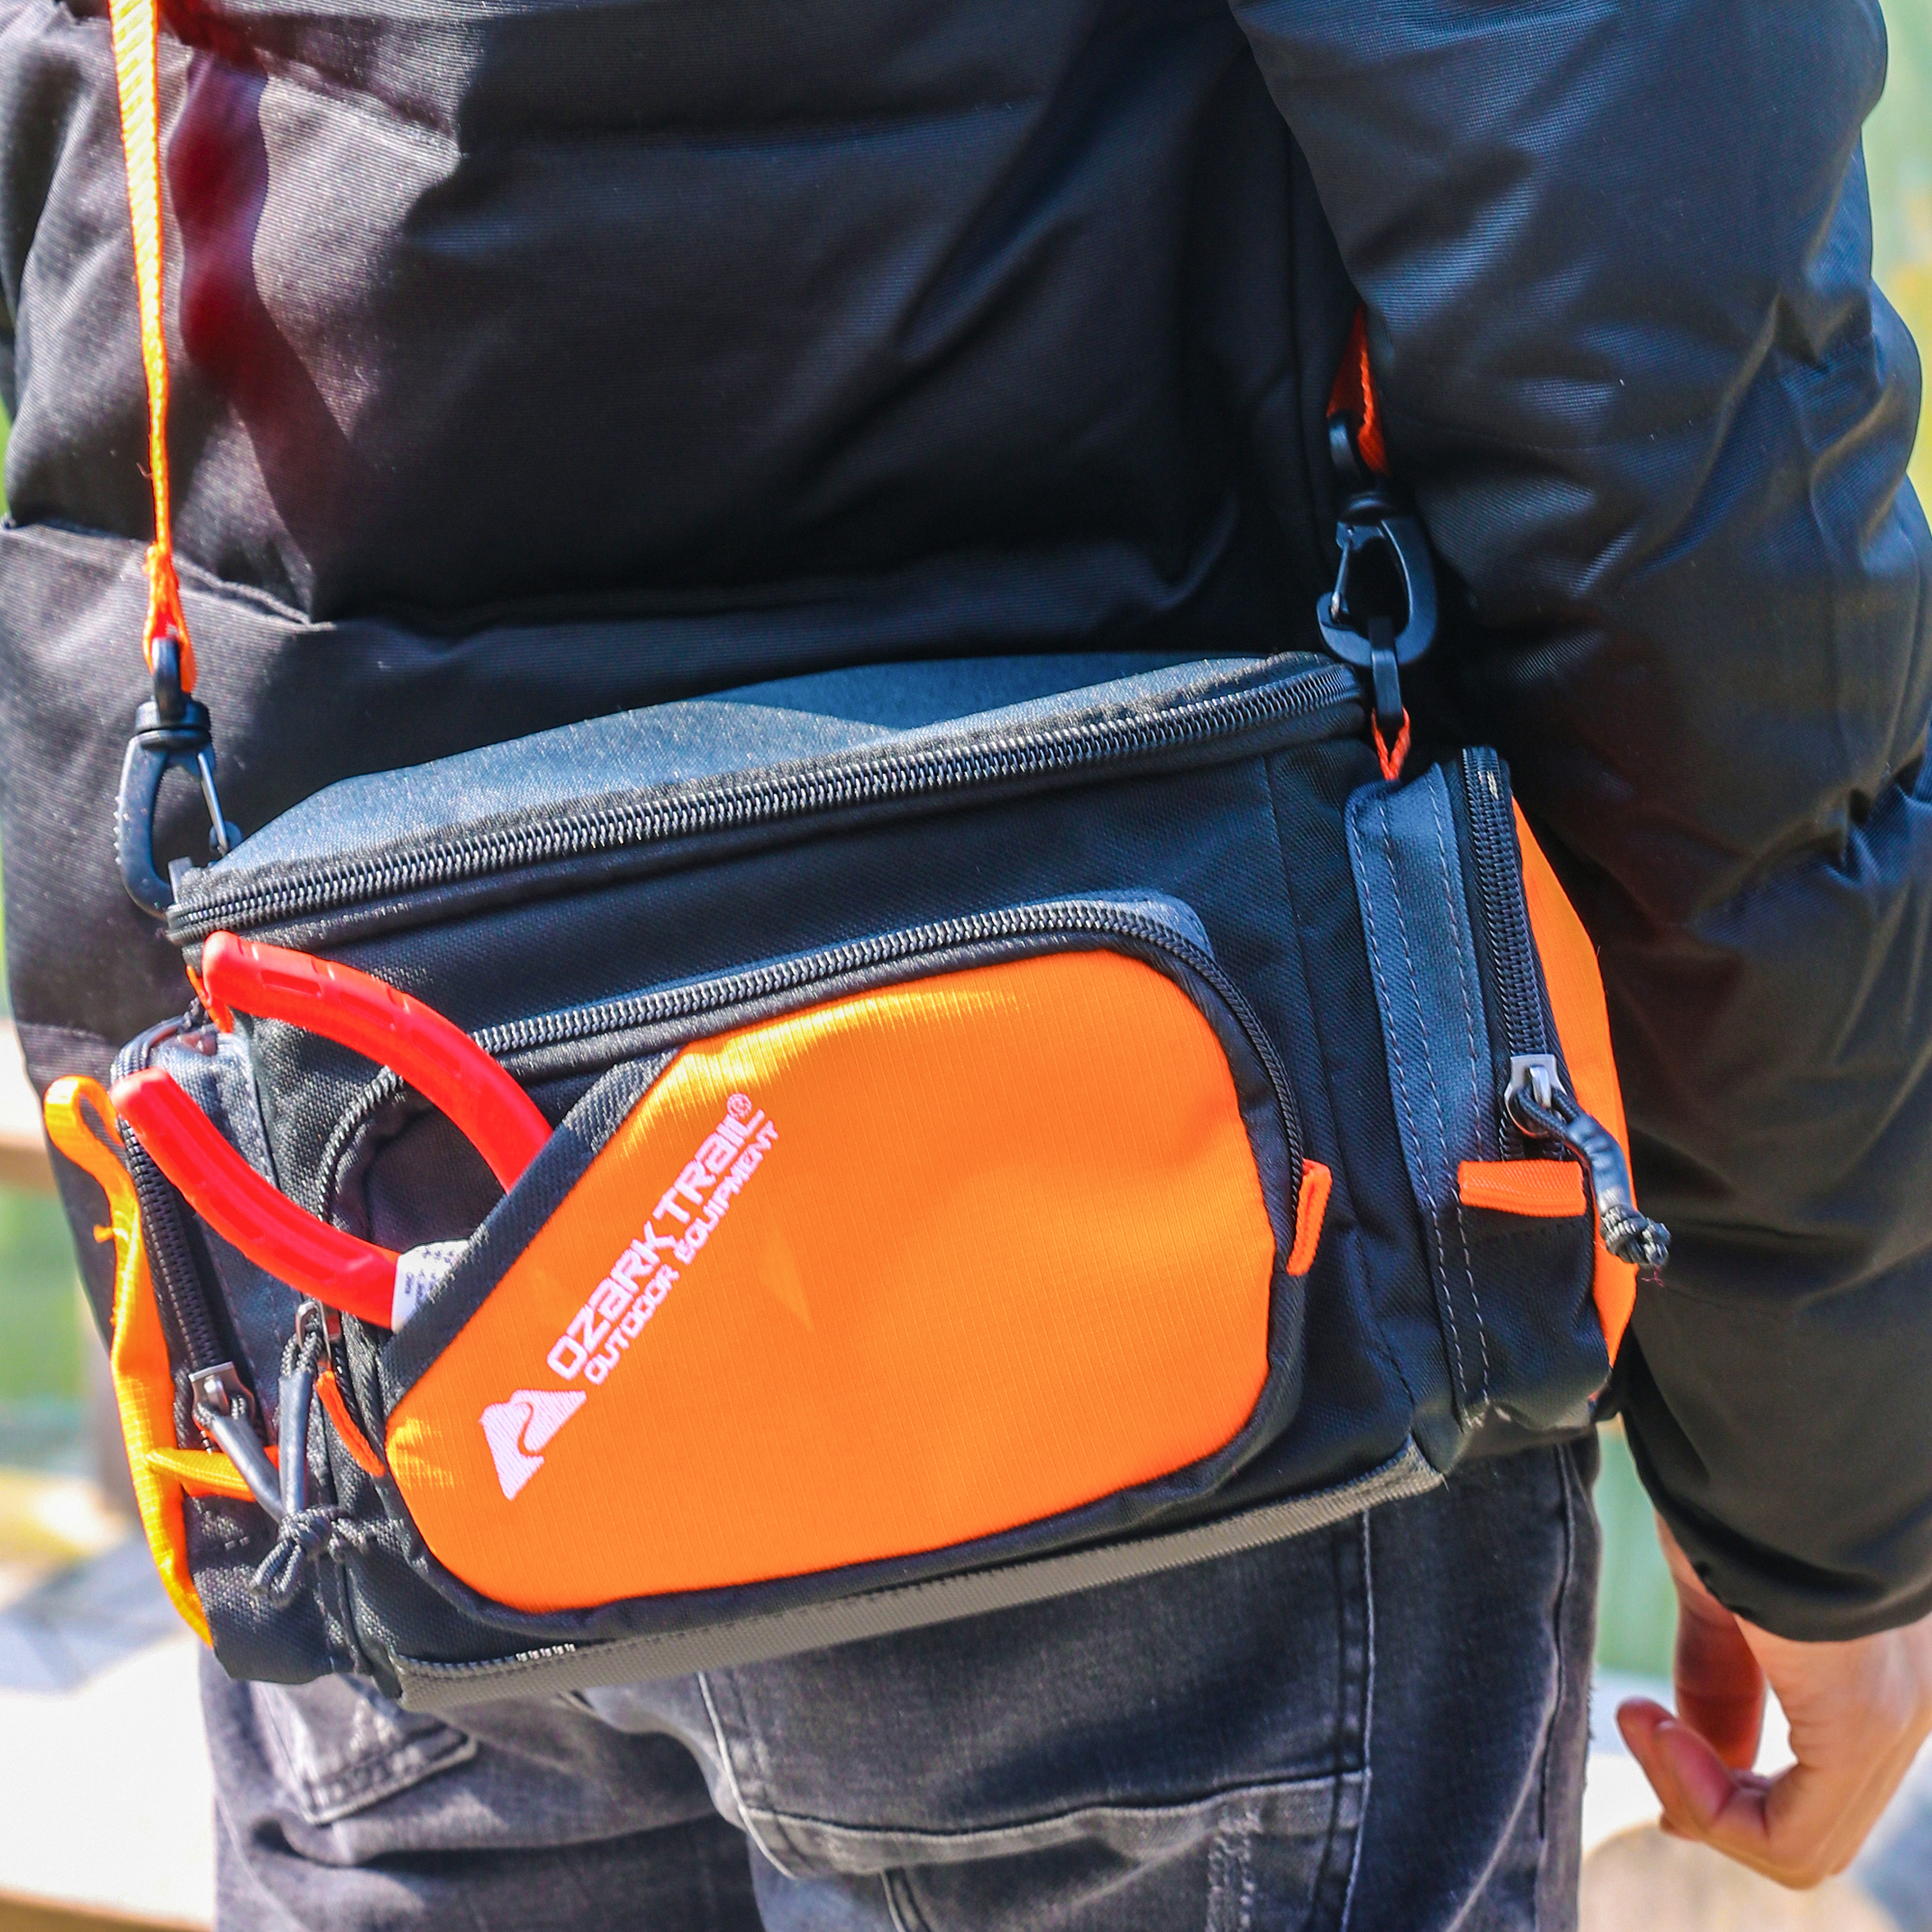 Ozark Trail Soft-Sided Tackle Bag with Carry Strap, Orange / Black - image 4 of 15